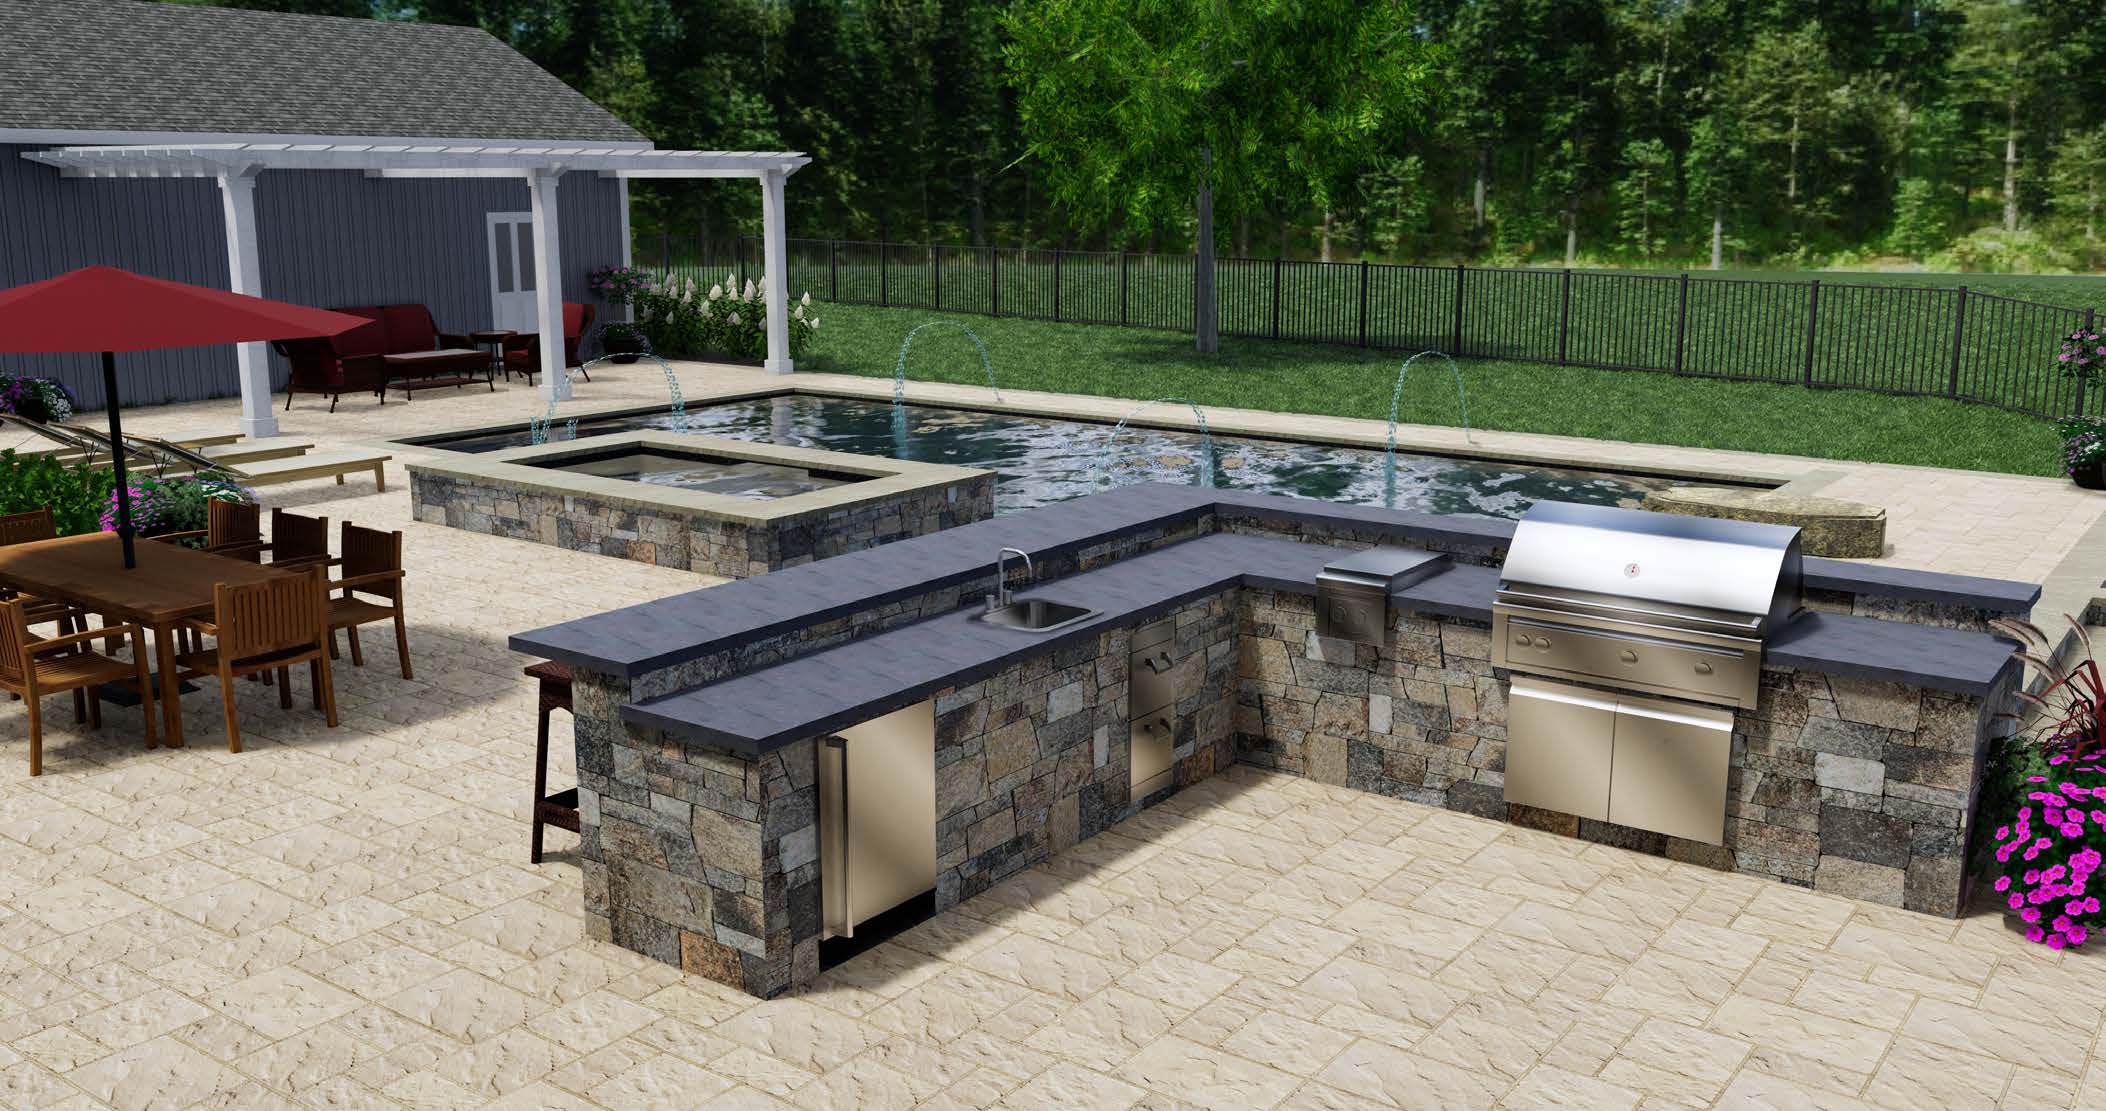 3d landscape design of outdoor kitchen